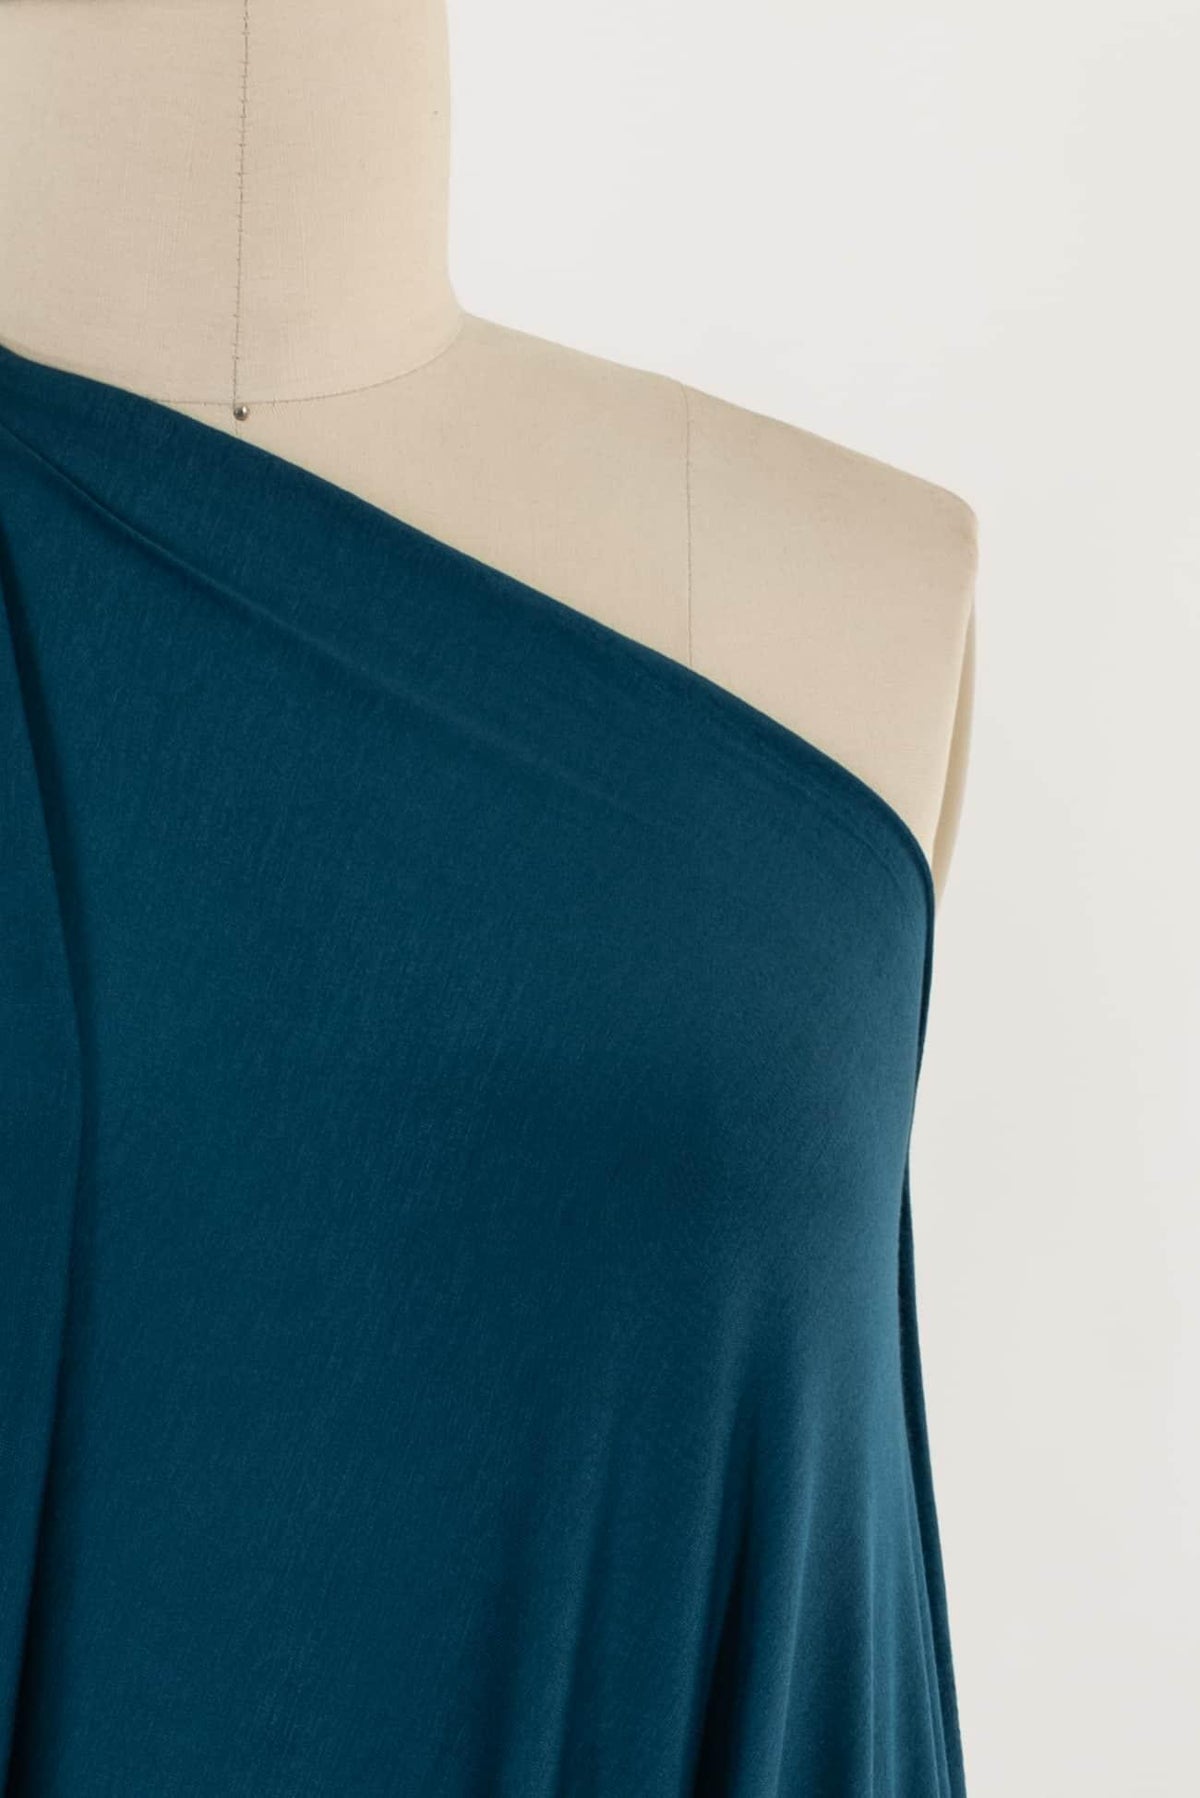 Sedona Turquoise Knit - Marcy Tilton Fabrics